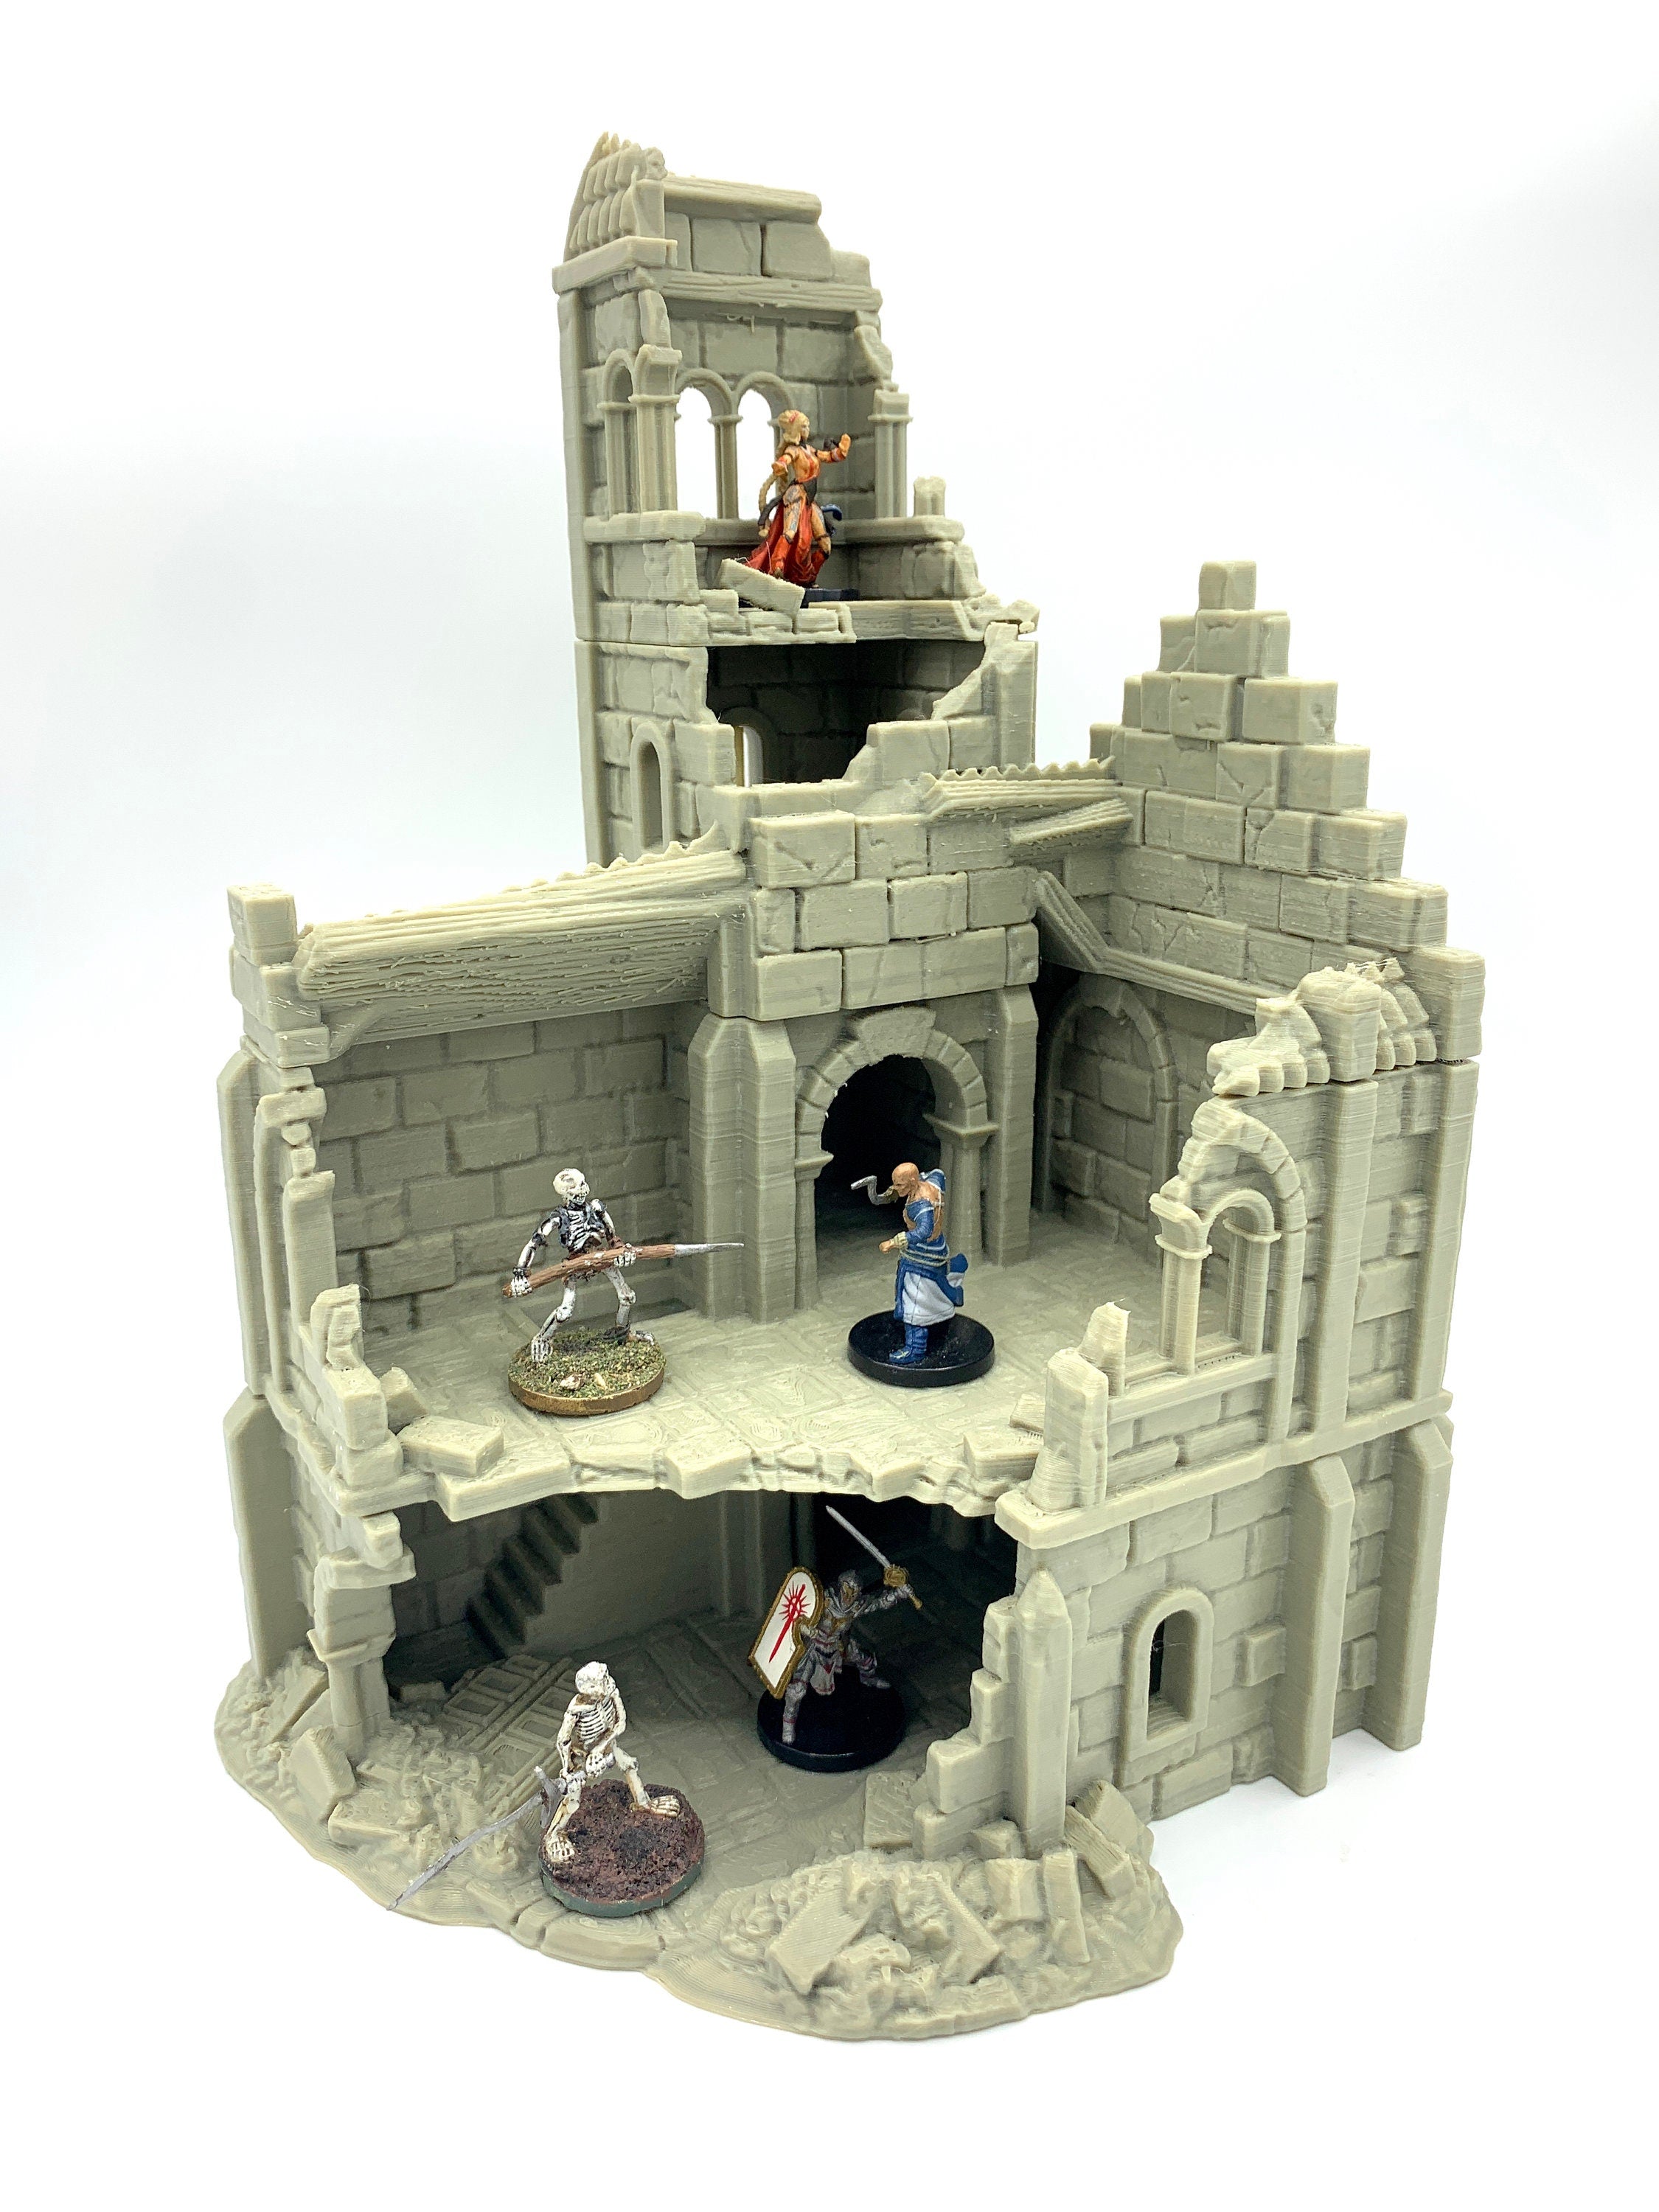 Arkenfel Ruined House 3 / Dark Realms Terrain / RPG and Wargame 3d Printed Tabletop Terrain / Licensed Printer